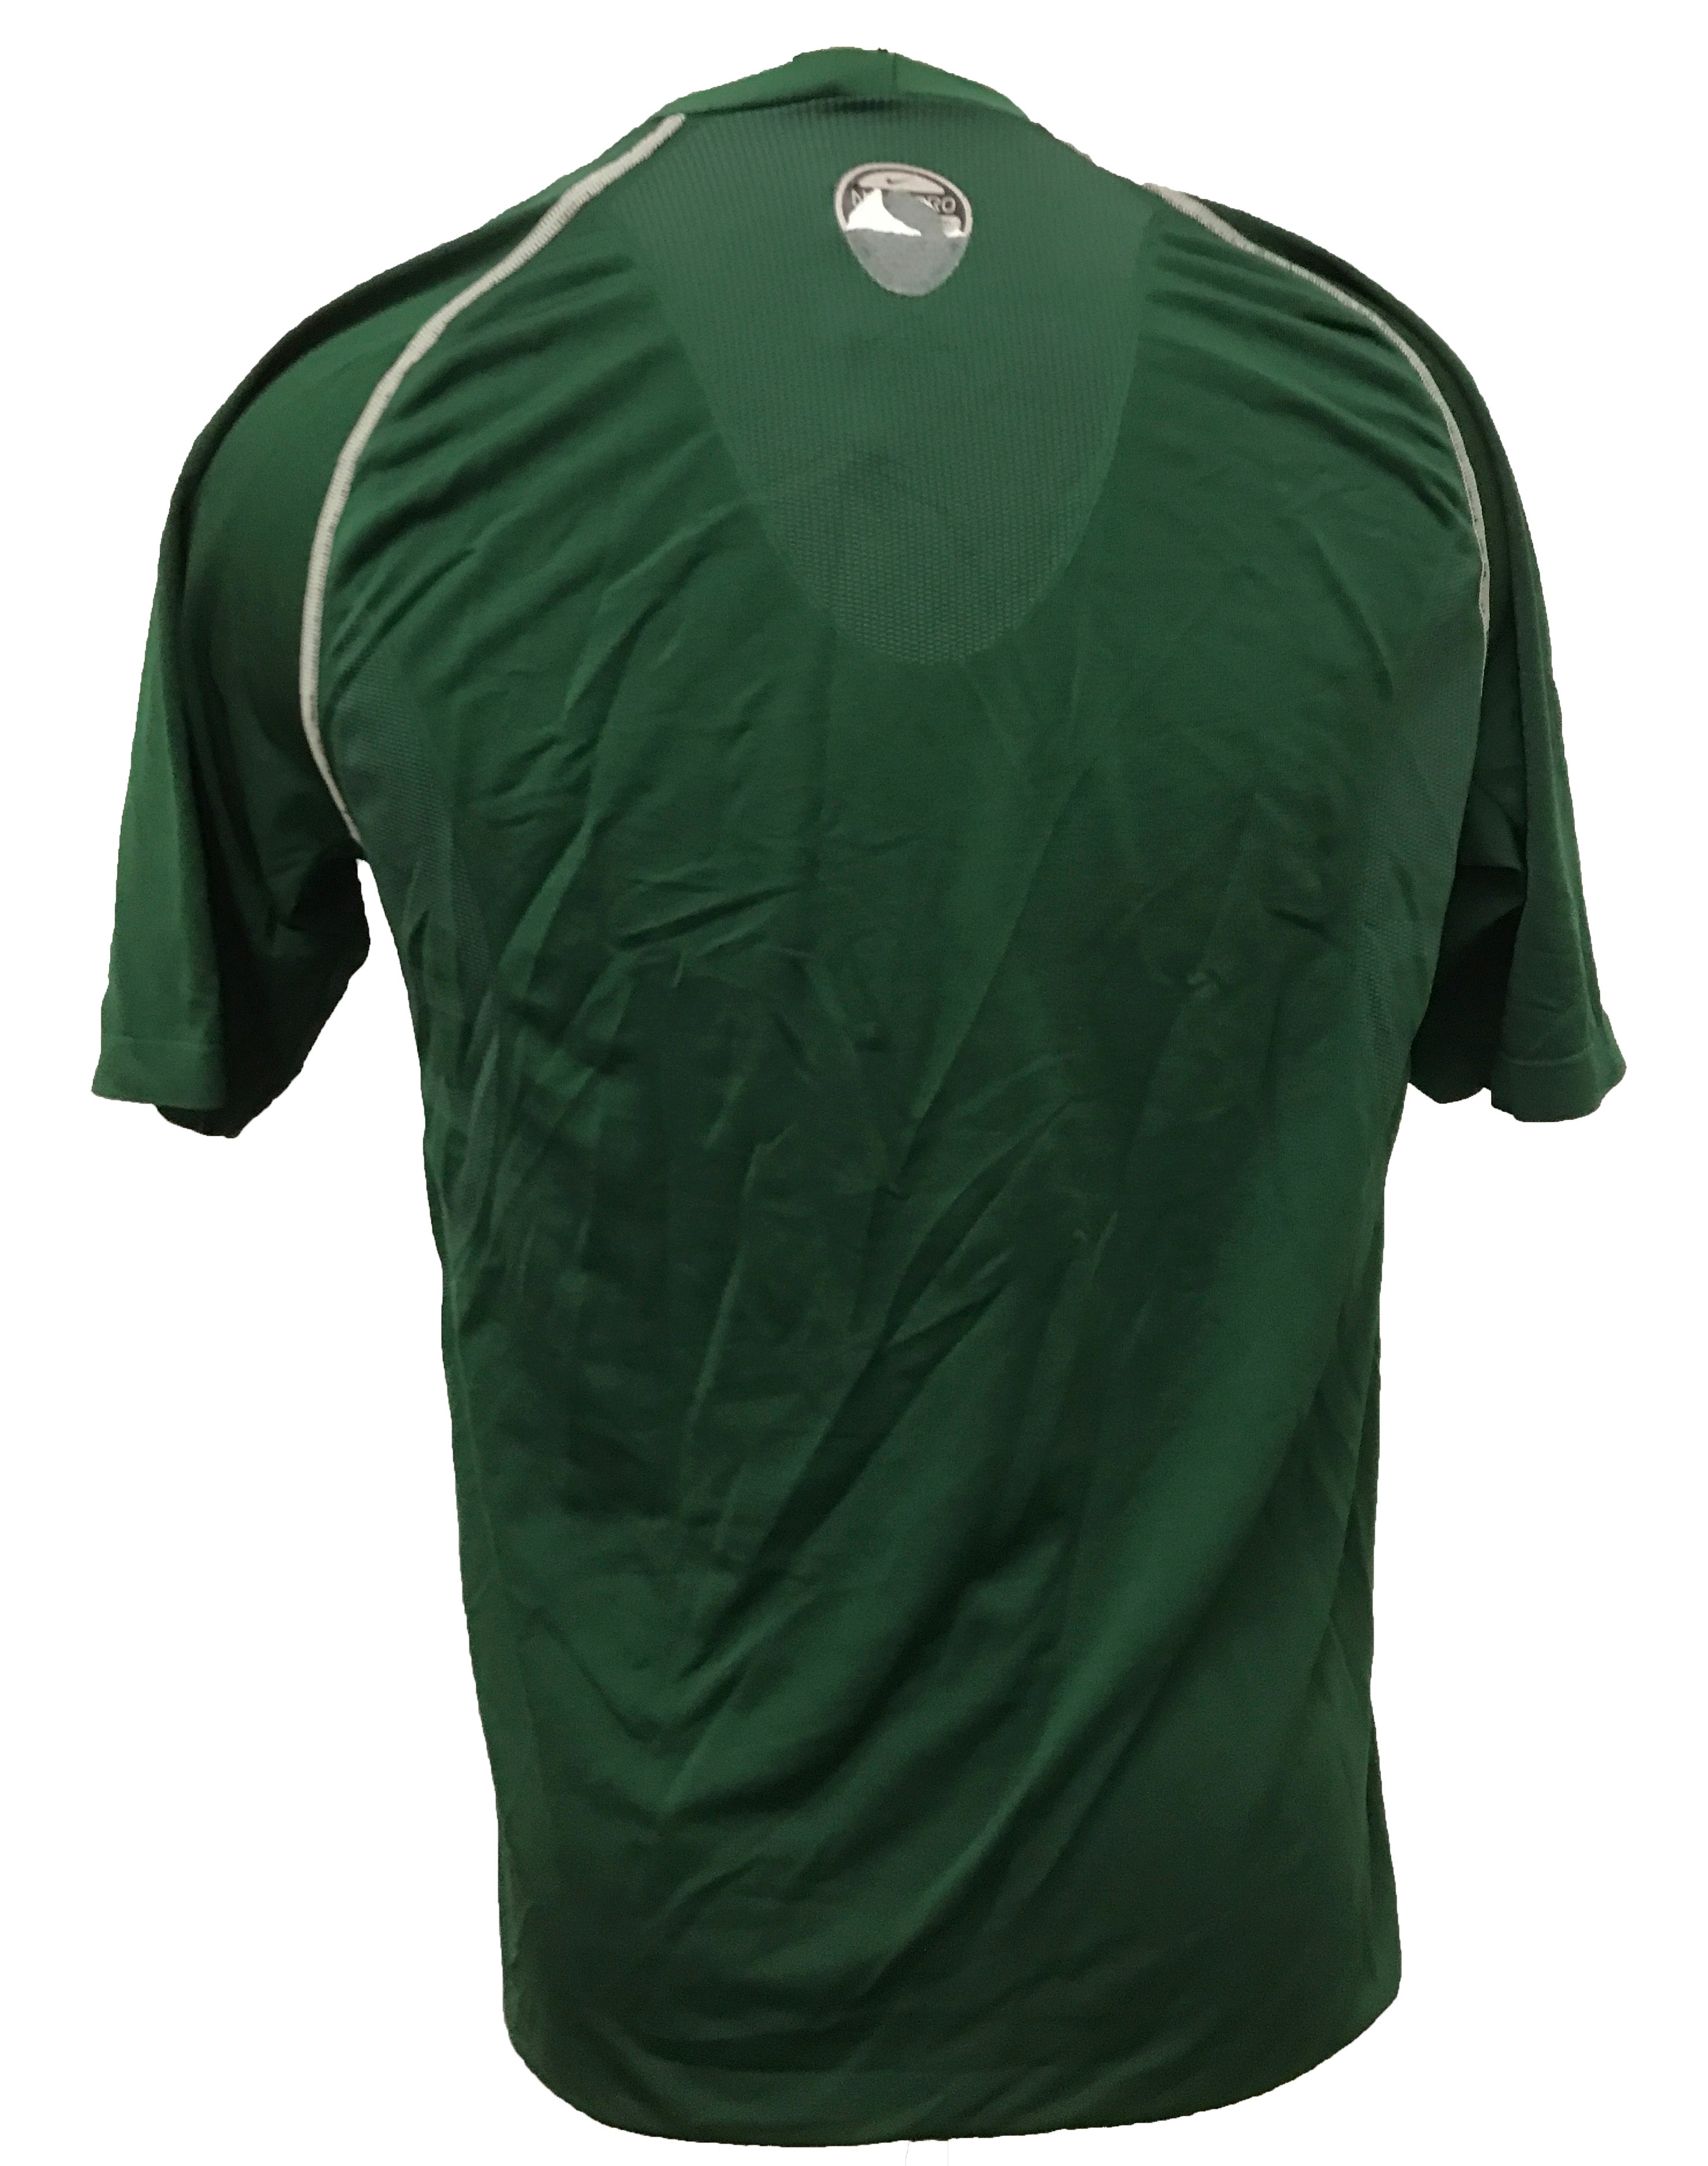 Nike MSU Green Spartan T-Shirt Men's Size L